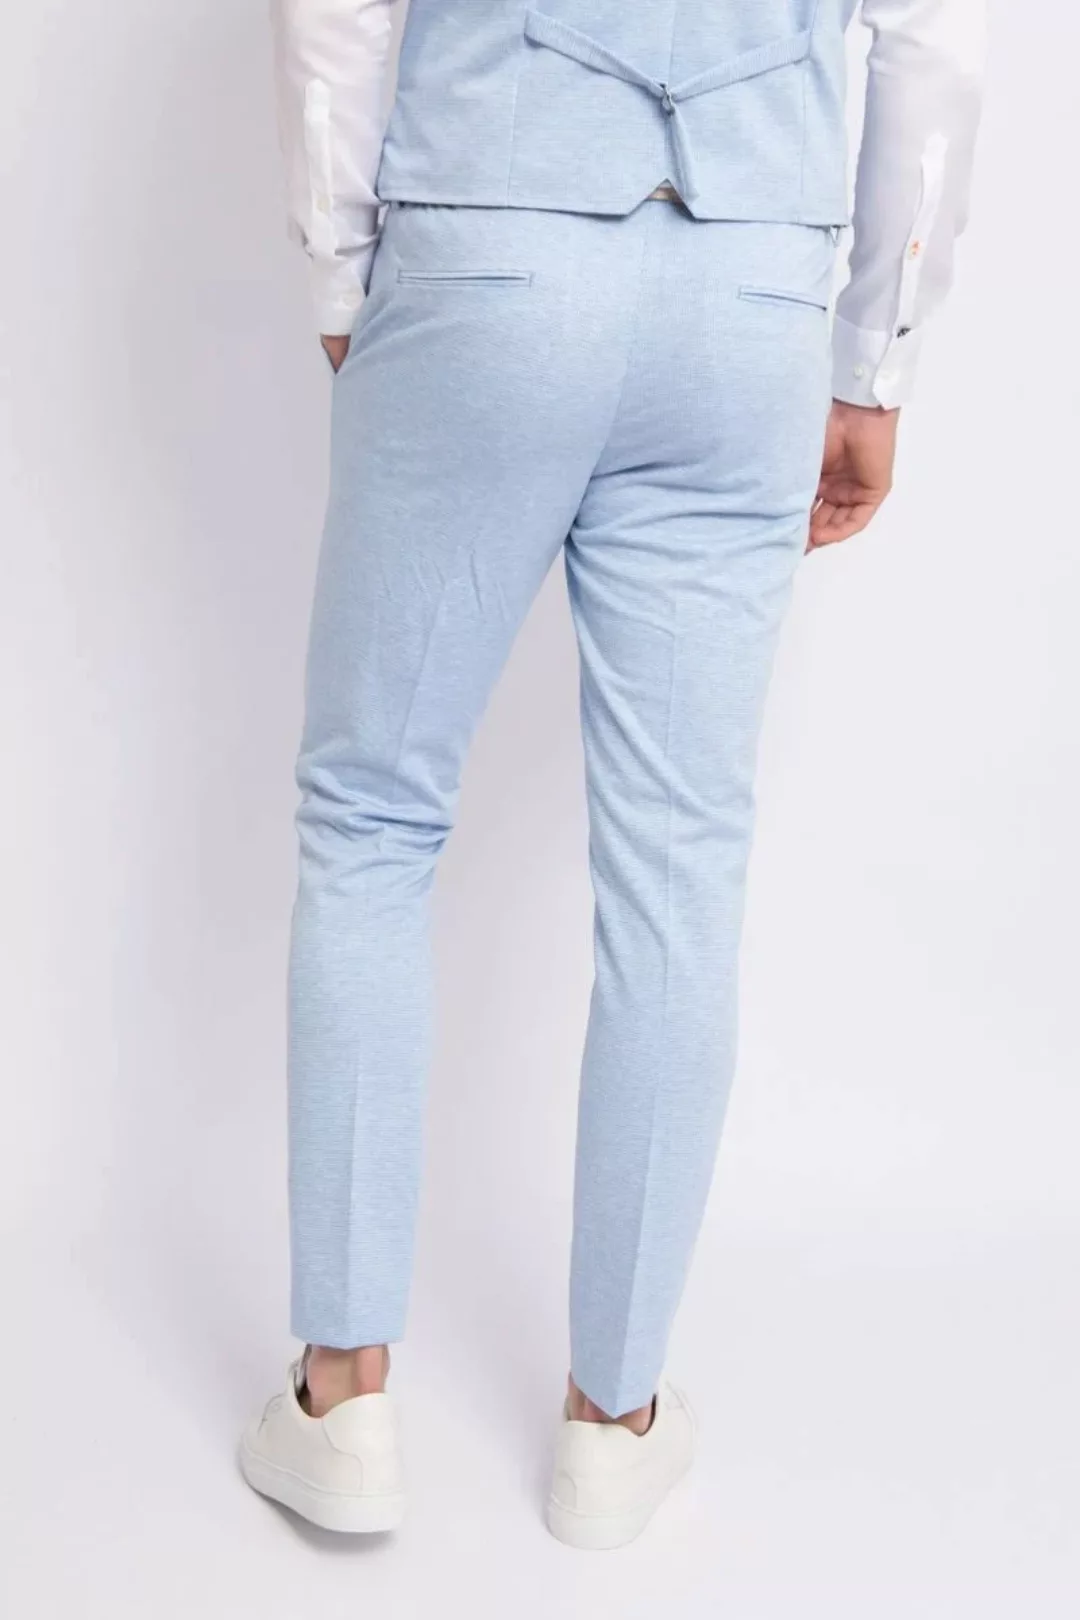 Suitable Dace Jersey Pantalon Hellblau - Größe 48 günstig online kaufen